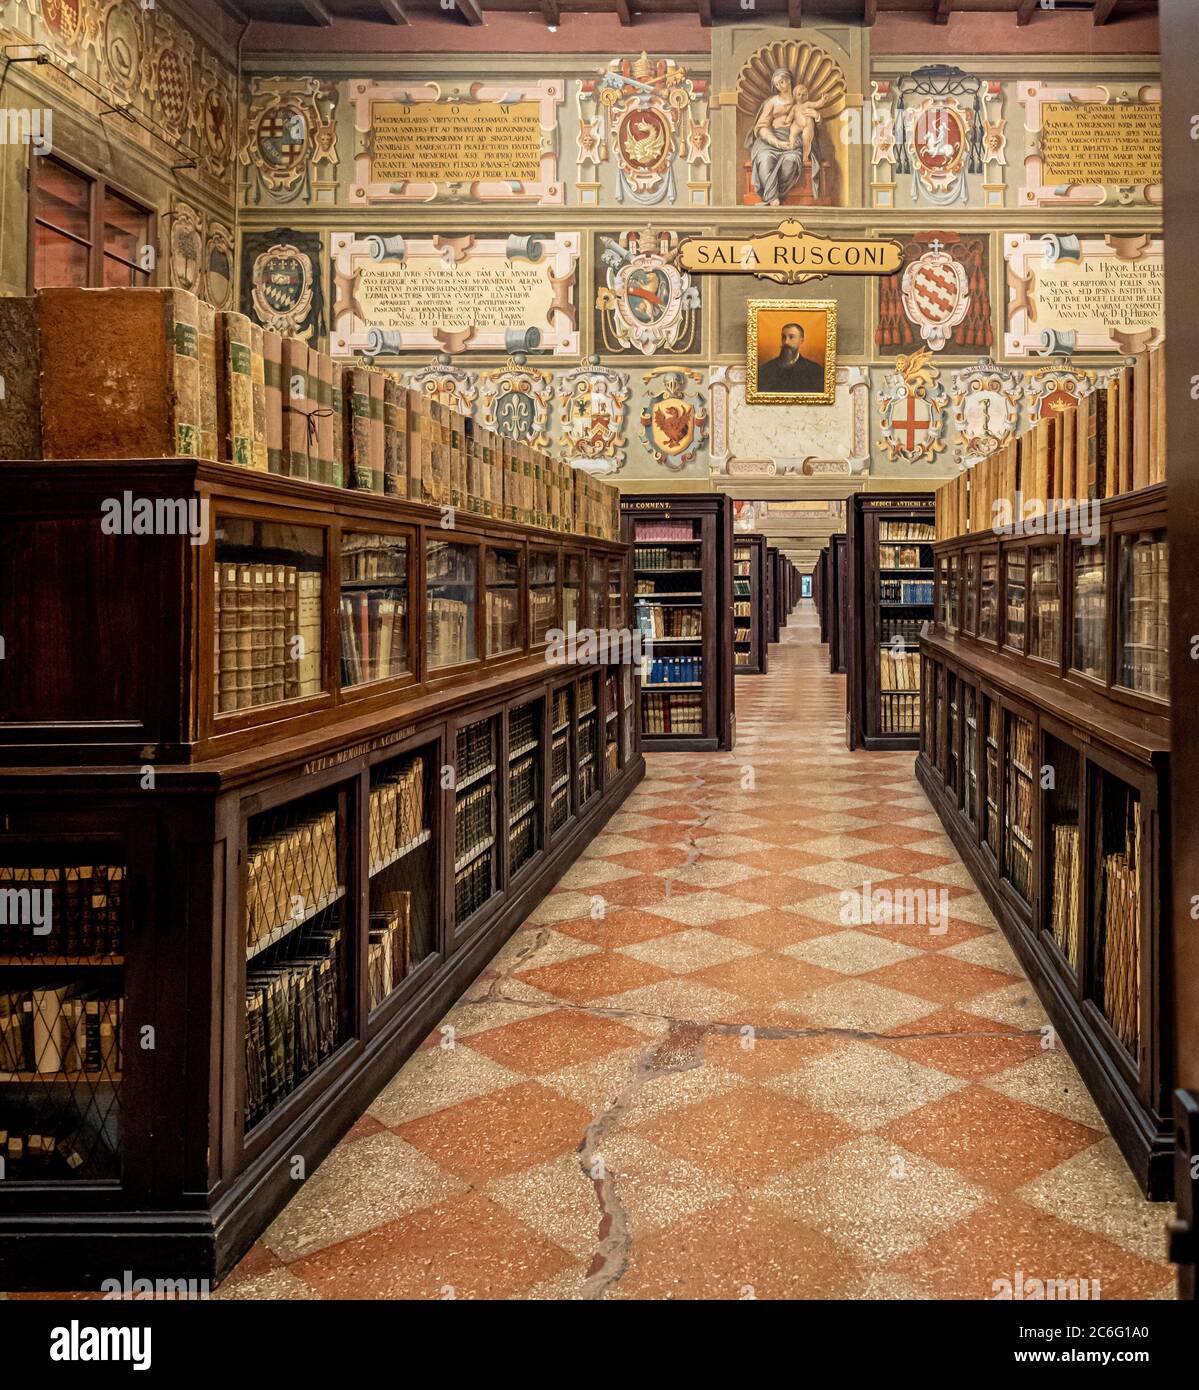 La bibliothèque Archiginnasio, Bologne, Italie. Banque D'Images